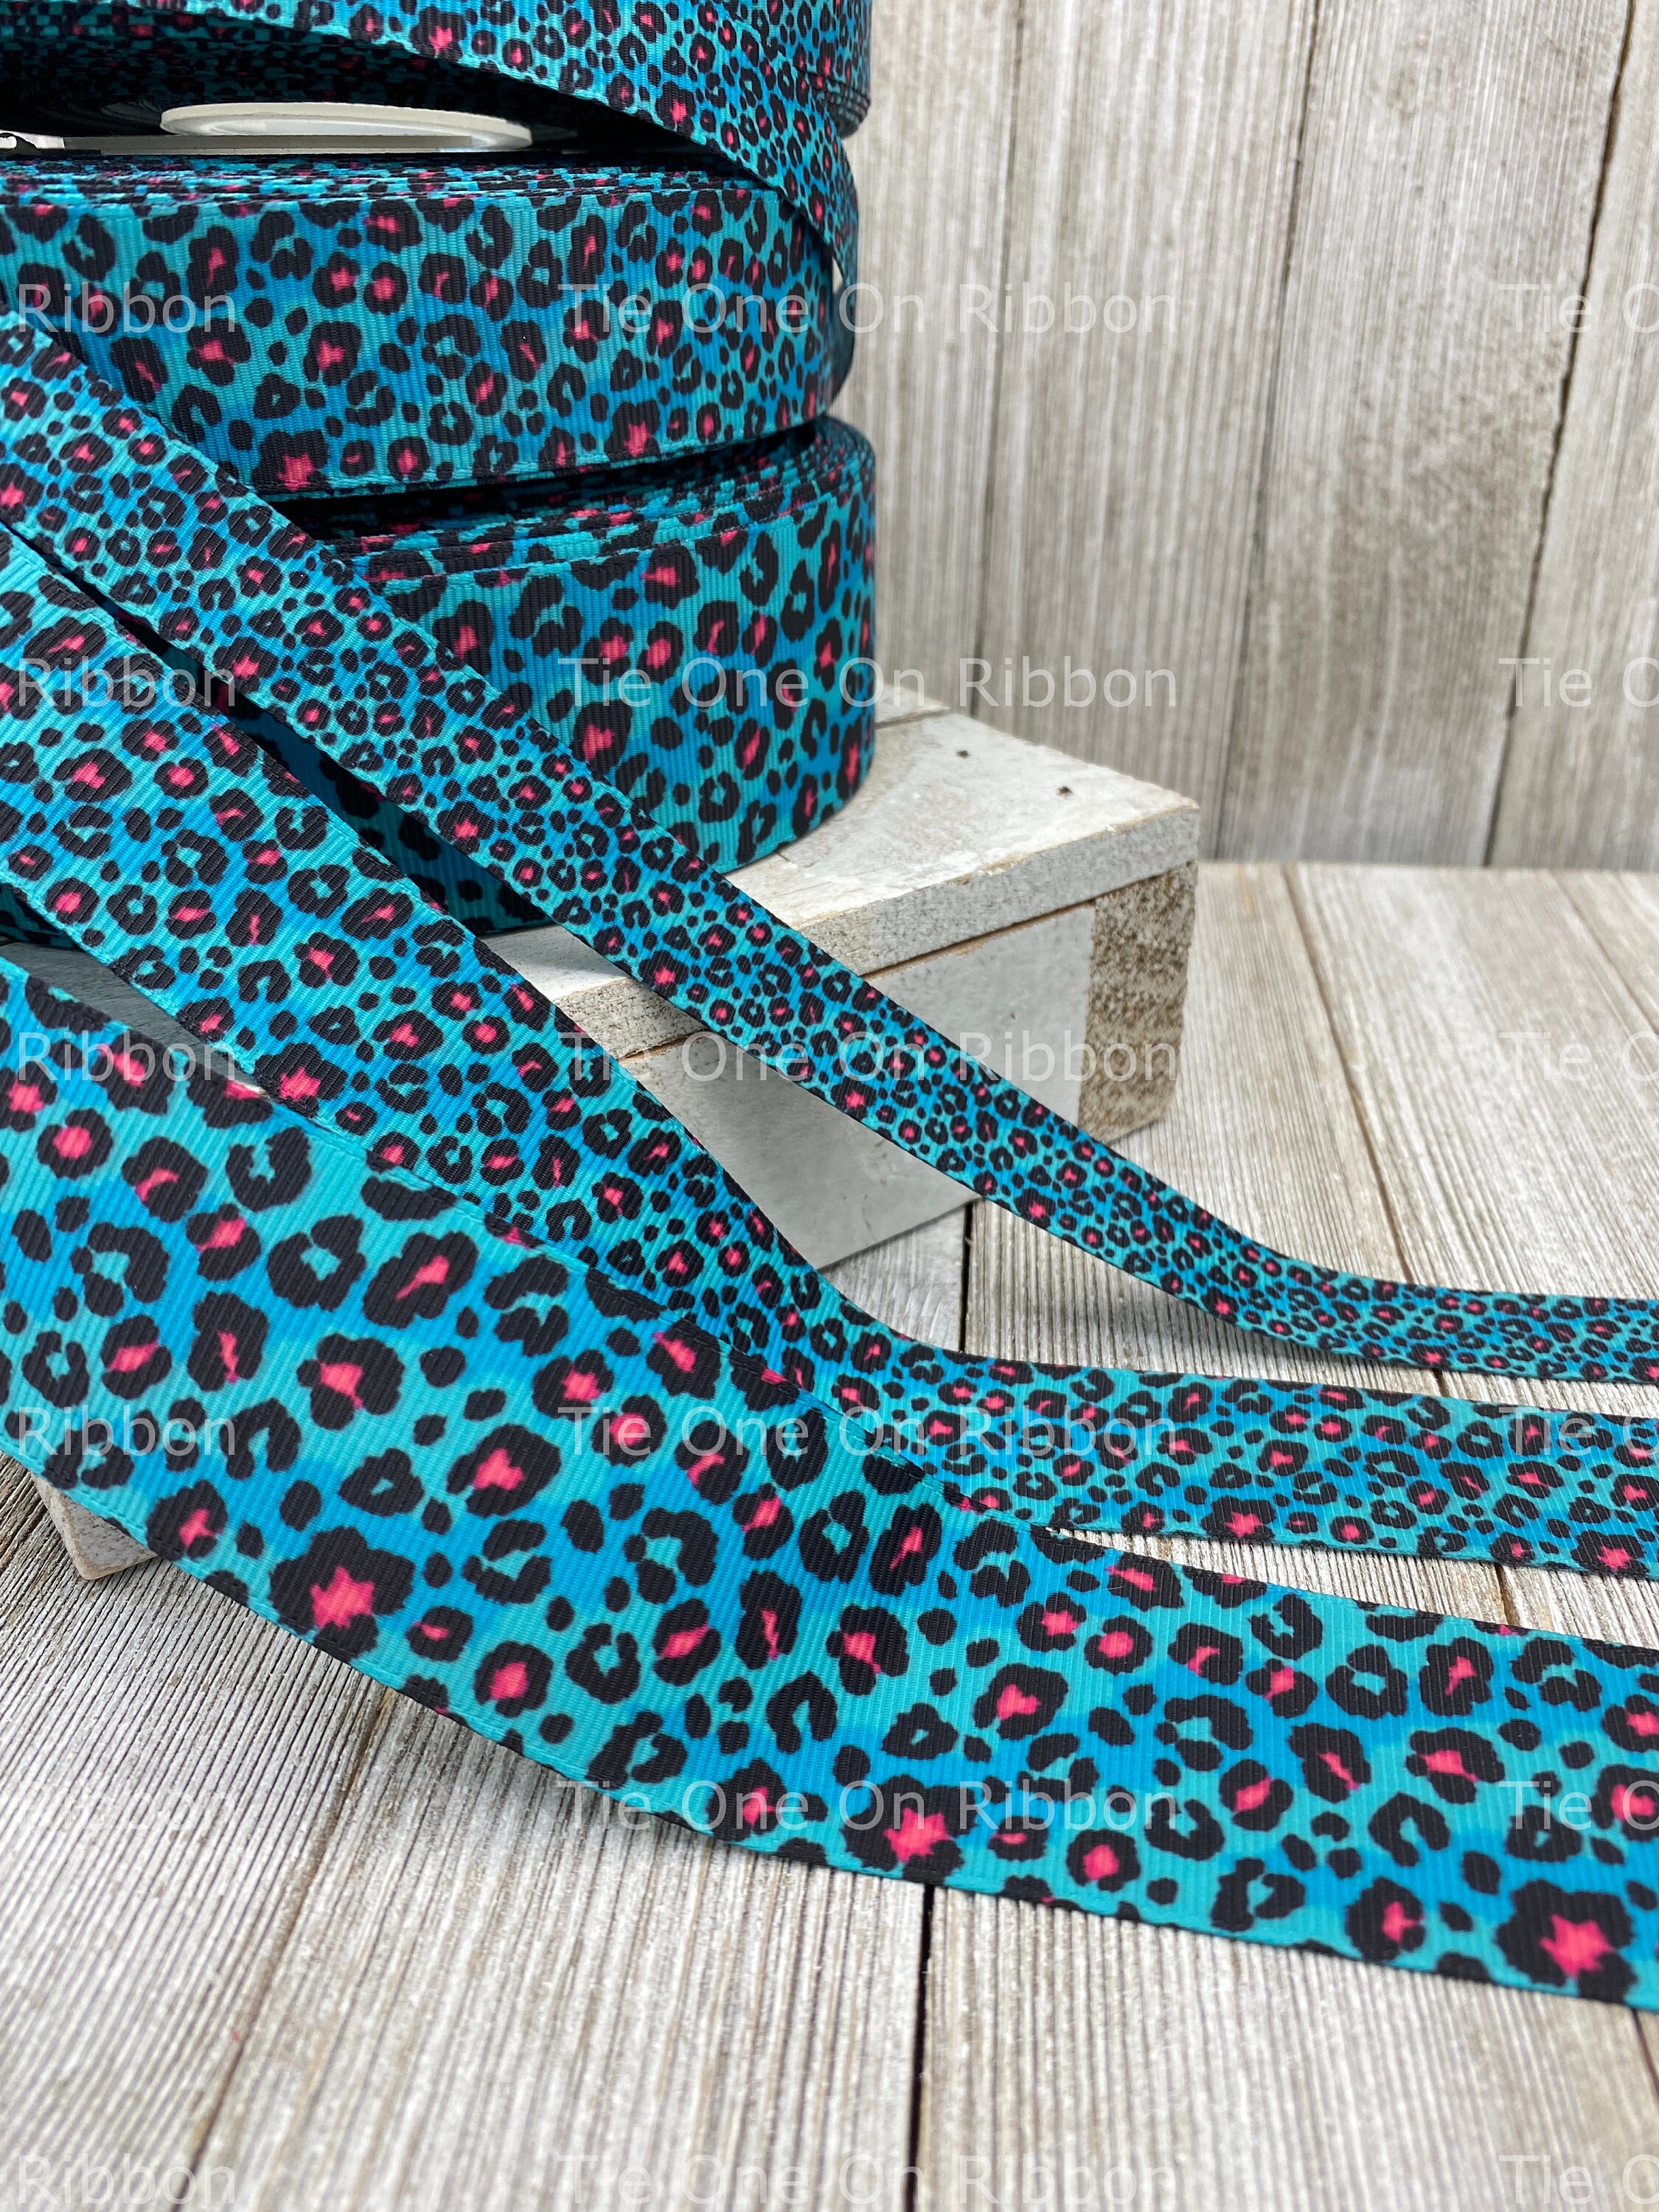 SALE 5 Yards Blue Leopard Print Grosgrain Ribbon 5/8 | Etsy